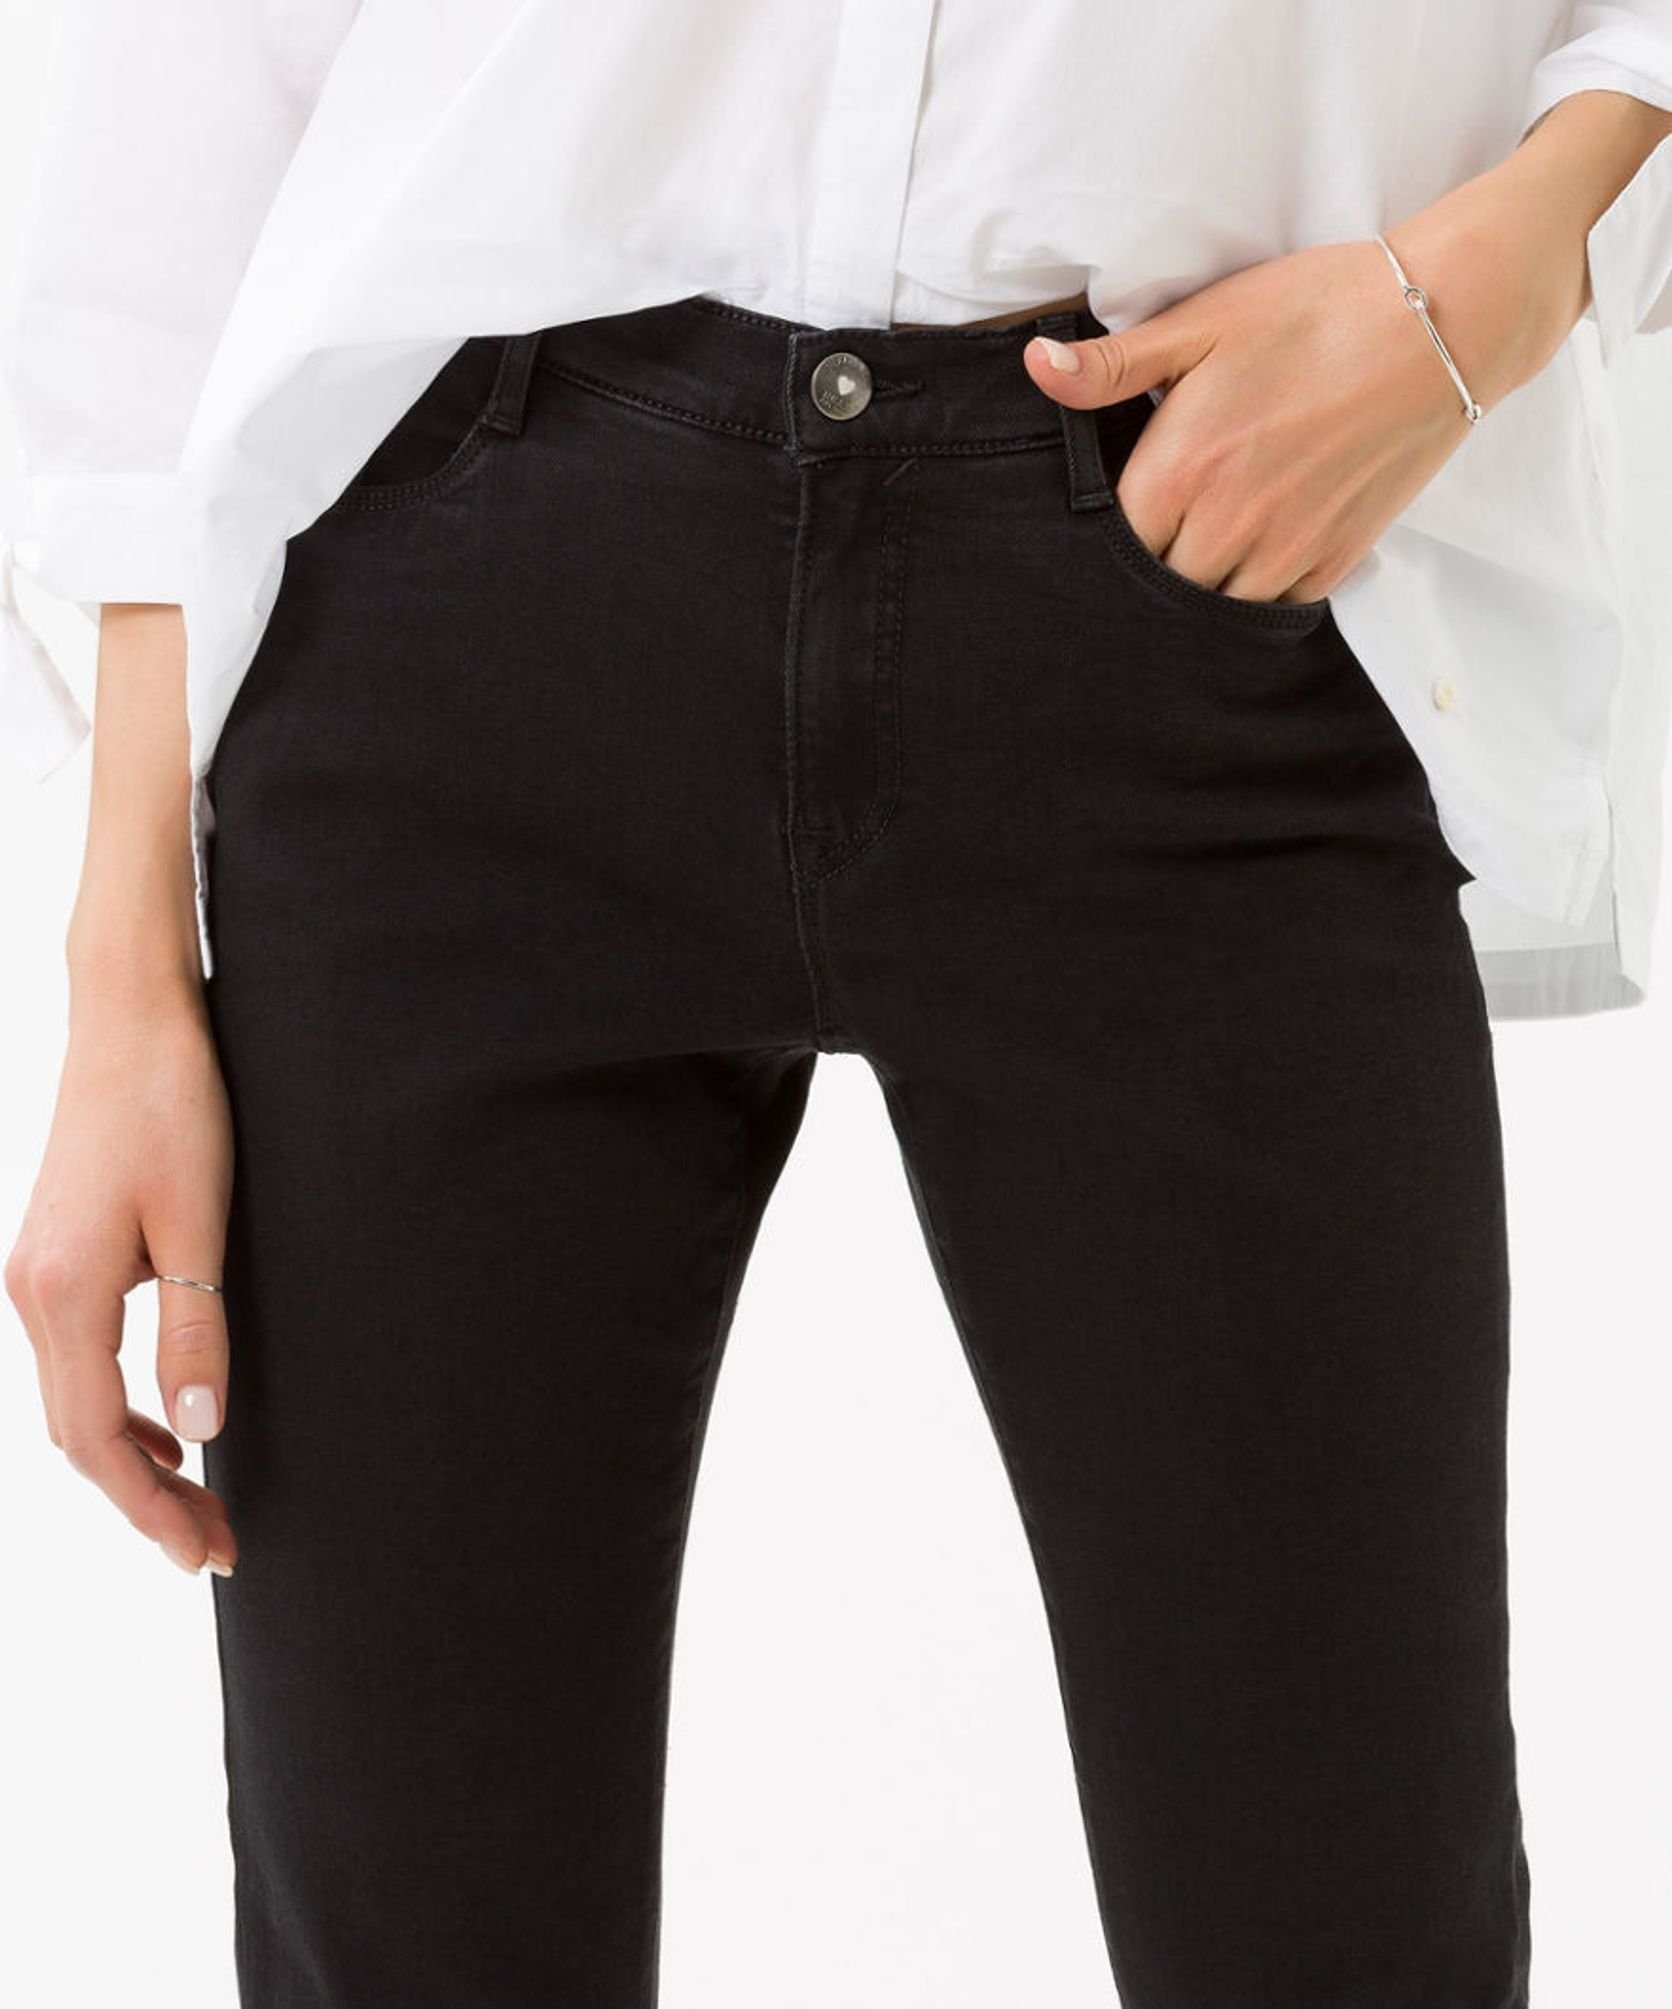 (02) Brax Black 5-Pocket-Jeans Clean 70-4000